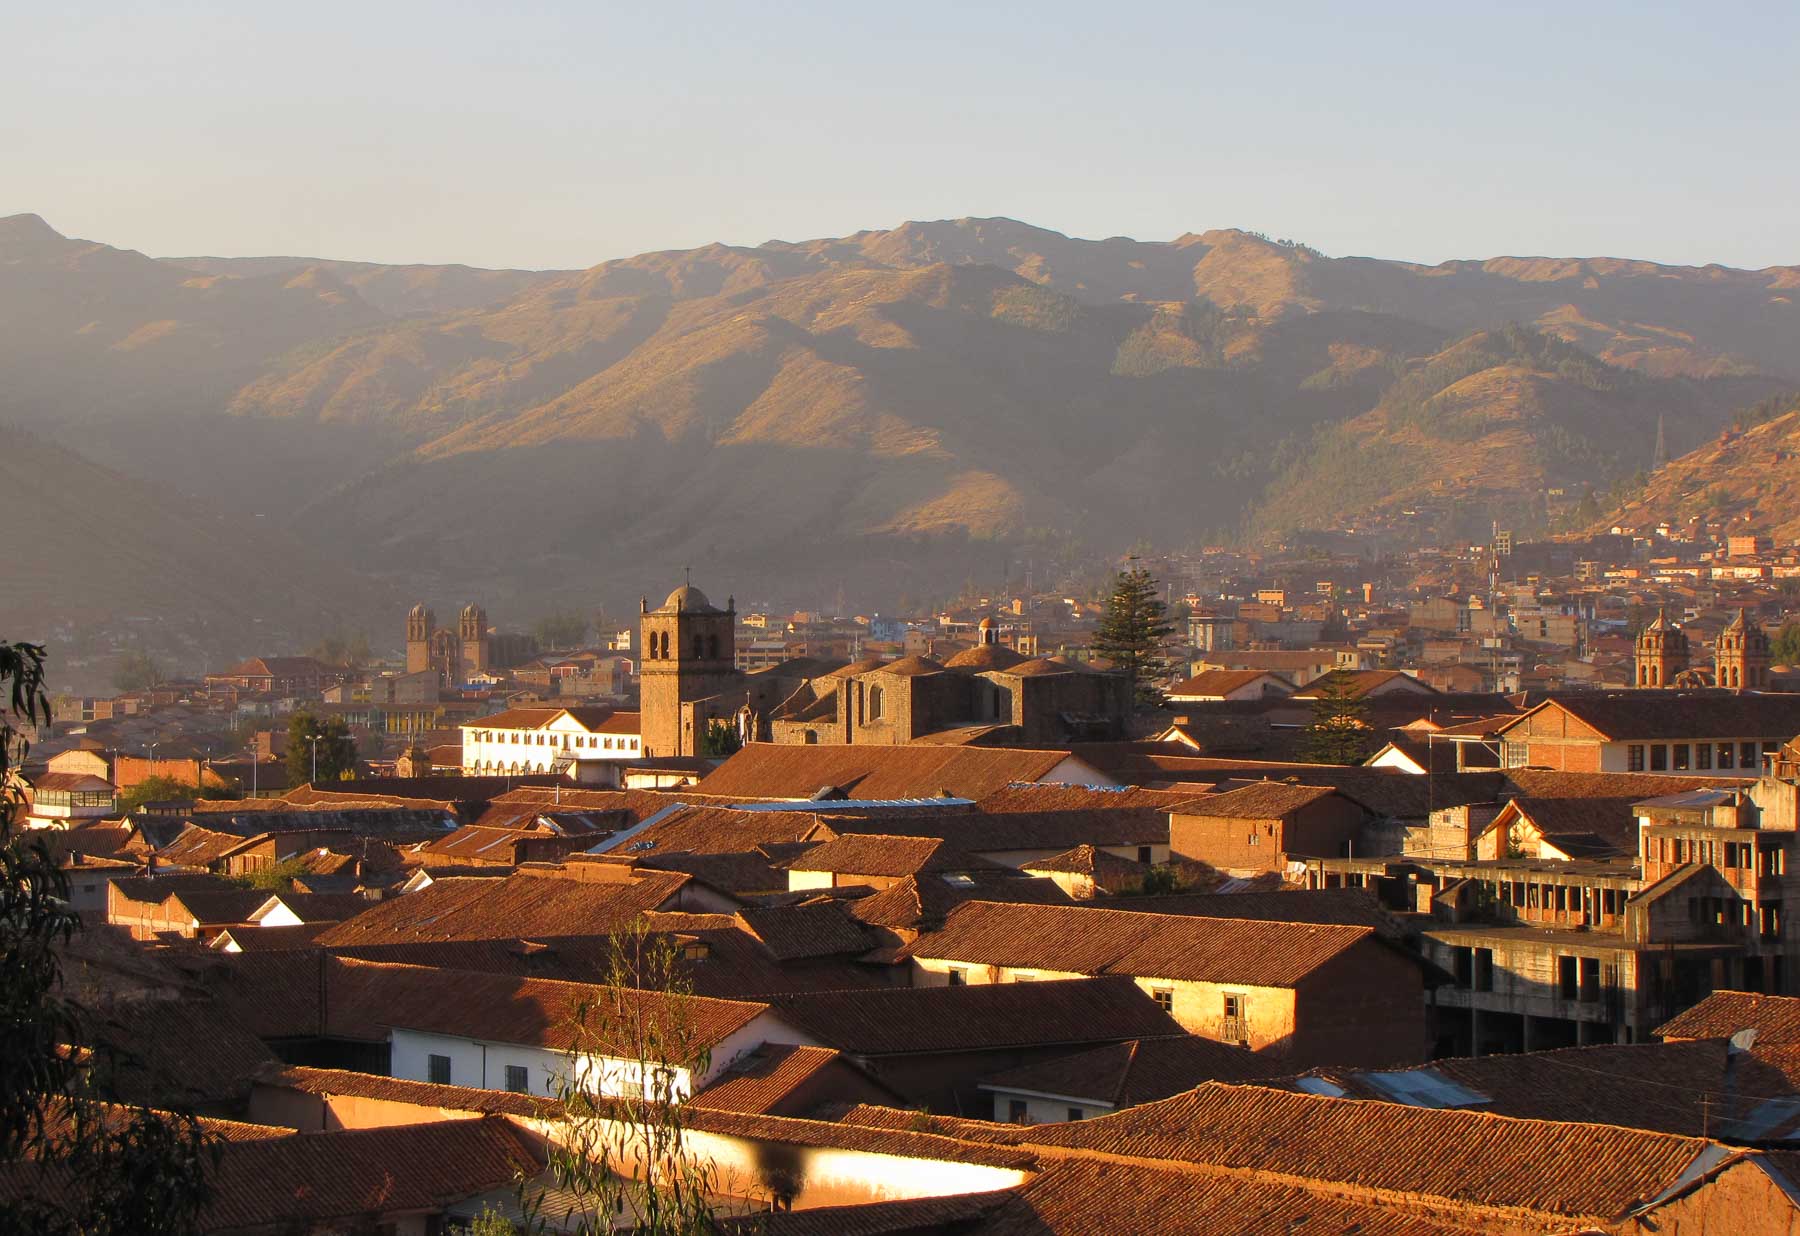 Visiter Cuzco, capitale de l'empire Inca